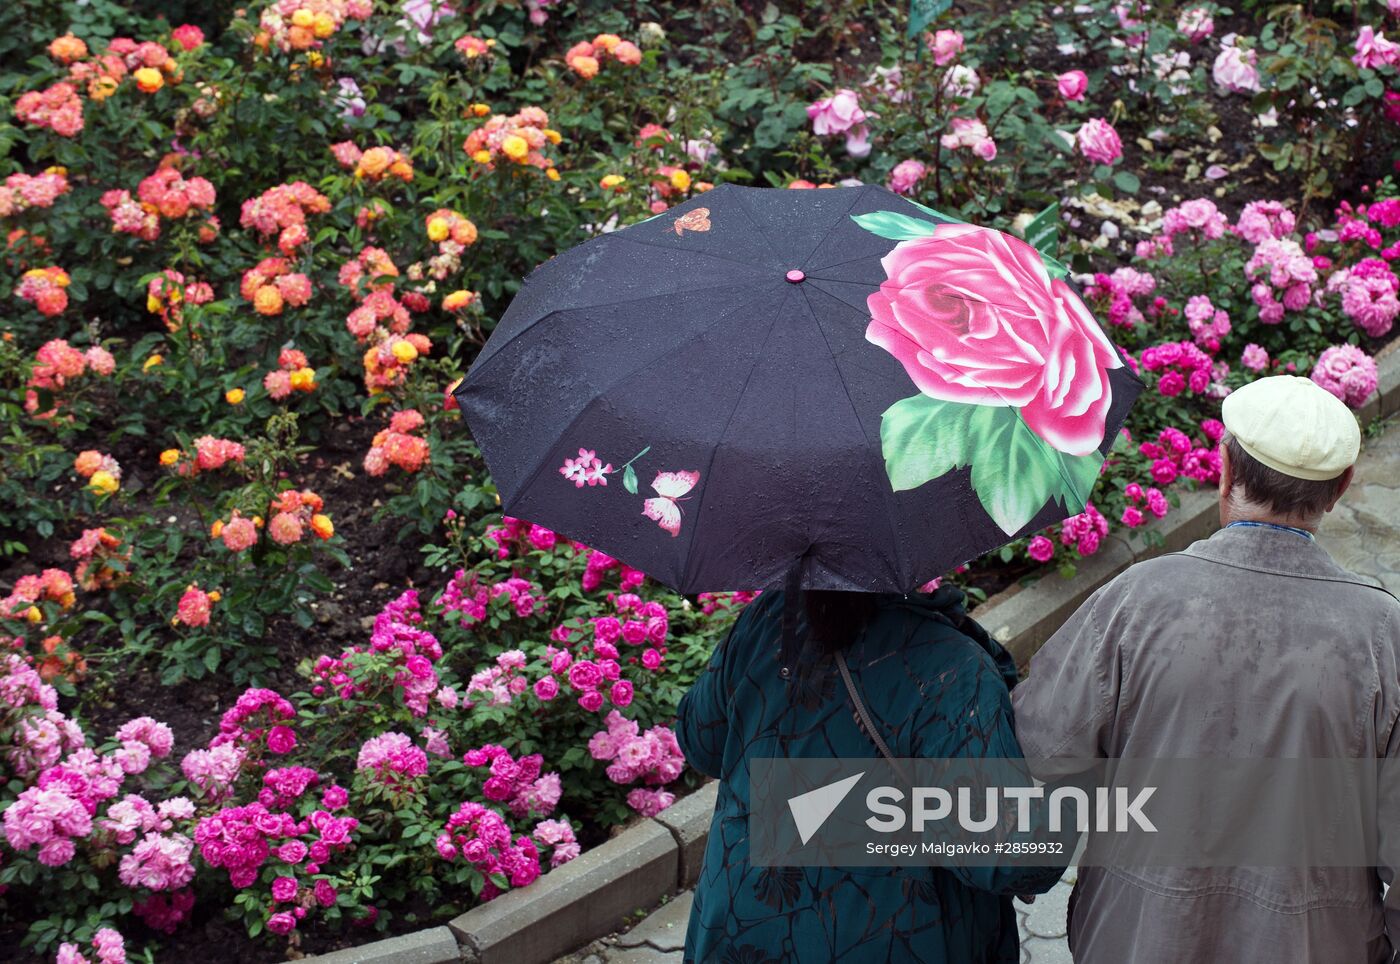 Rose Waltz exhibition in Crimea